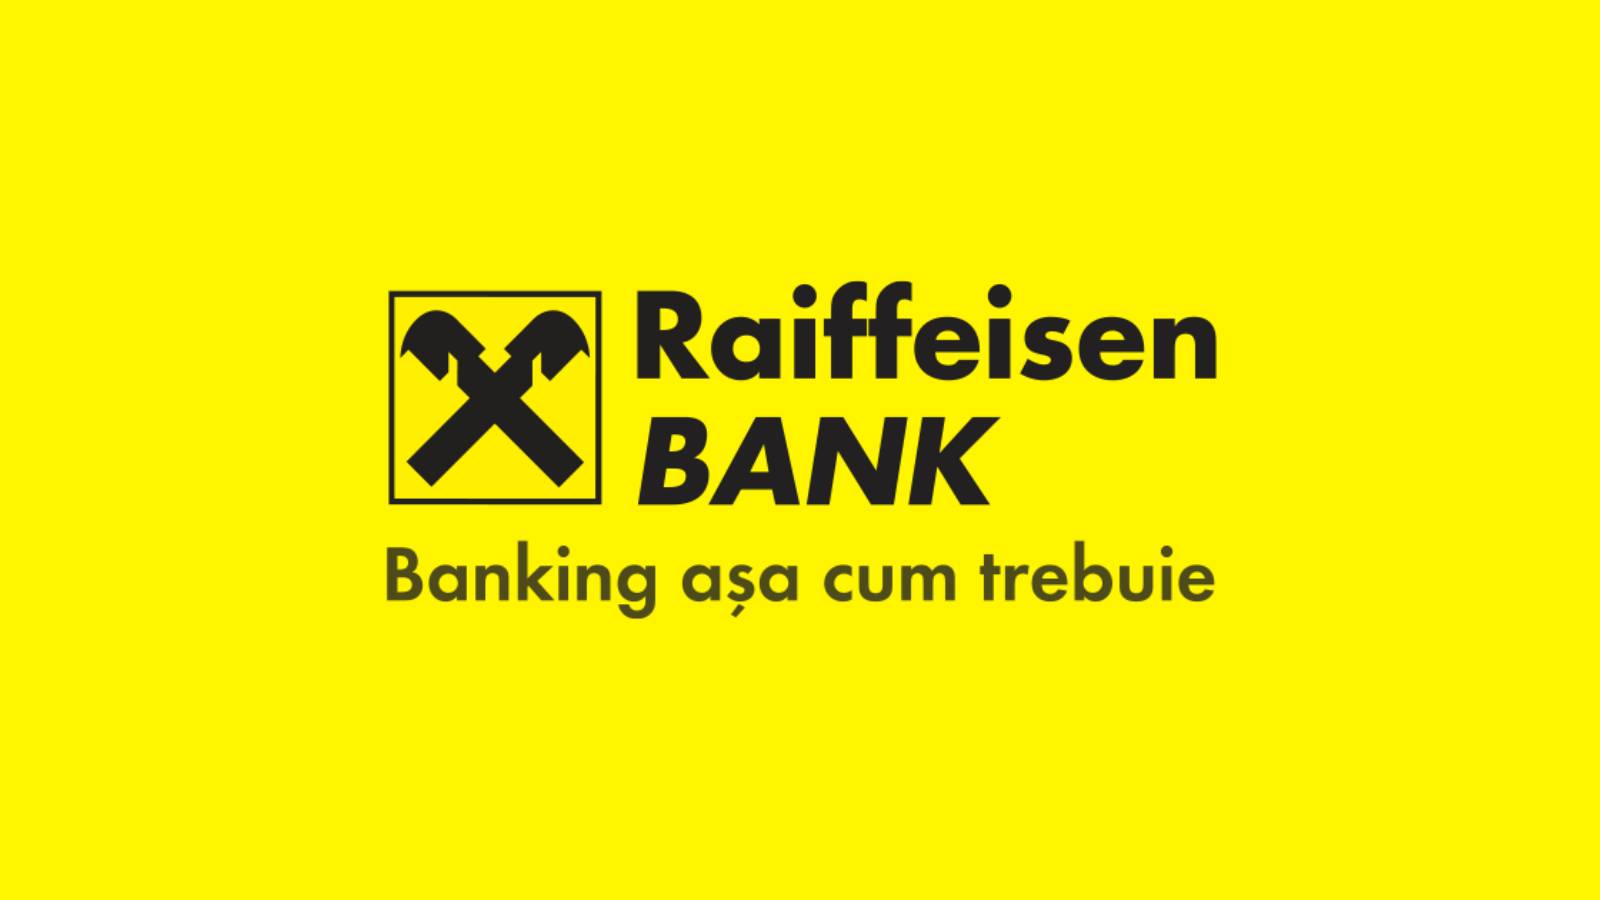 Cadeau de la Banque Raiffeisen